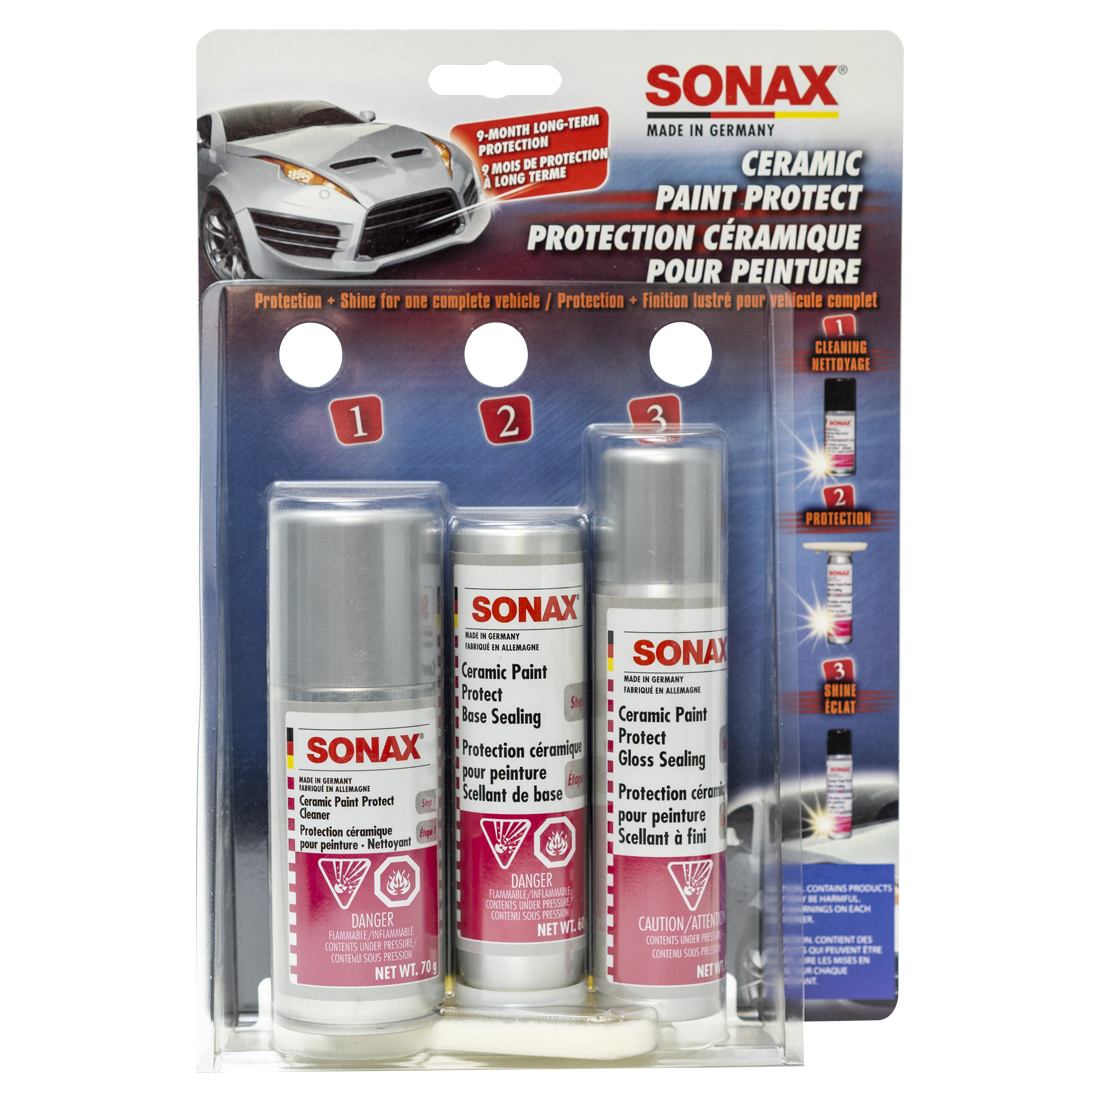 Sonax Ceramic Paint Protect Kit *LIQUIDATION*